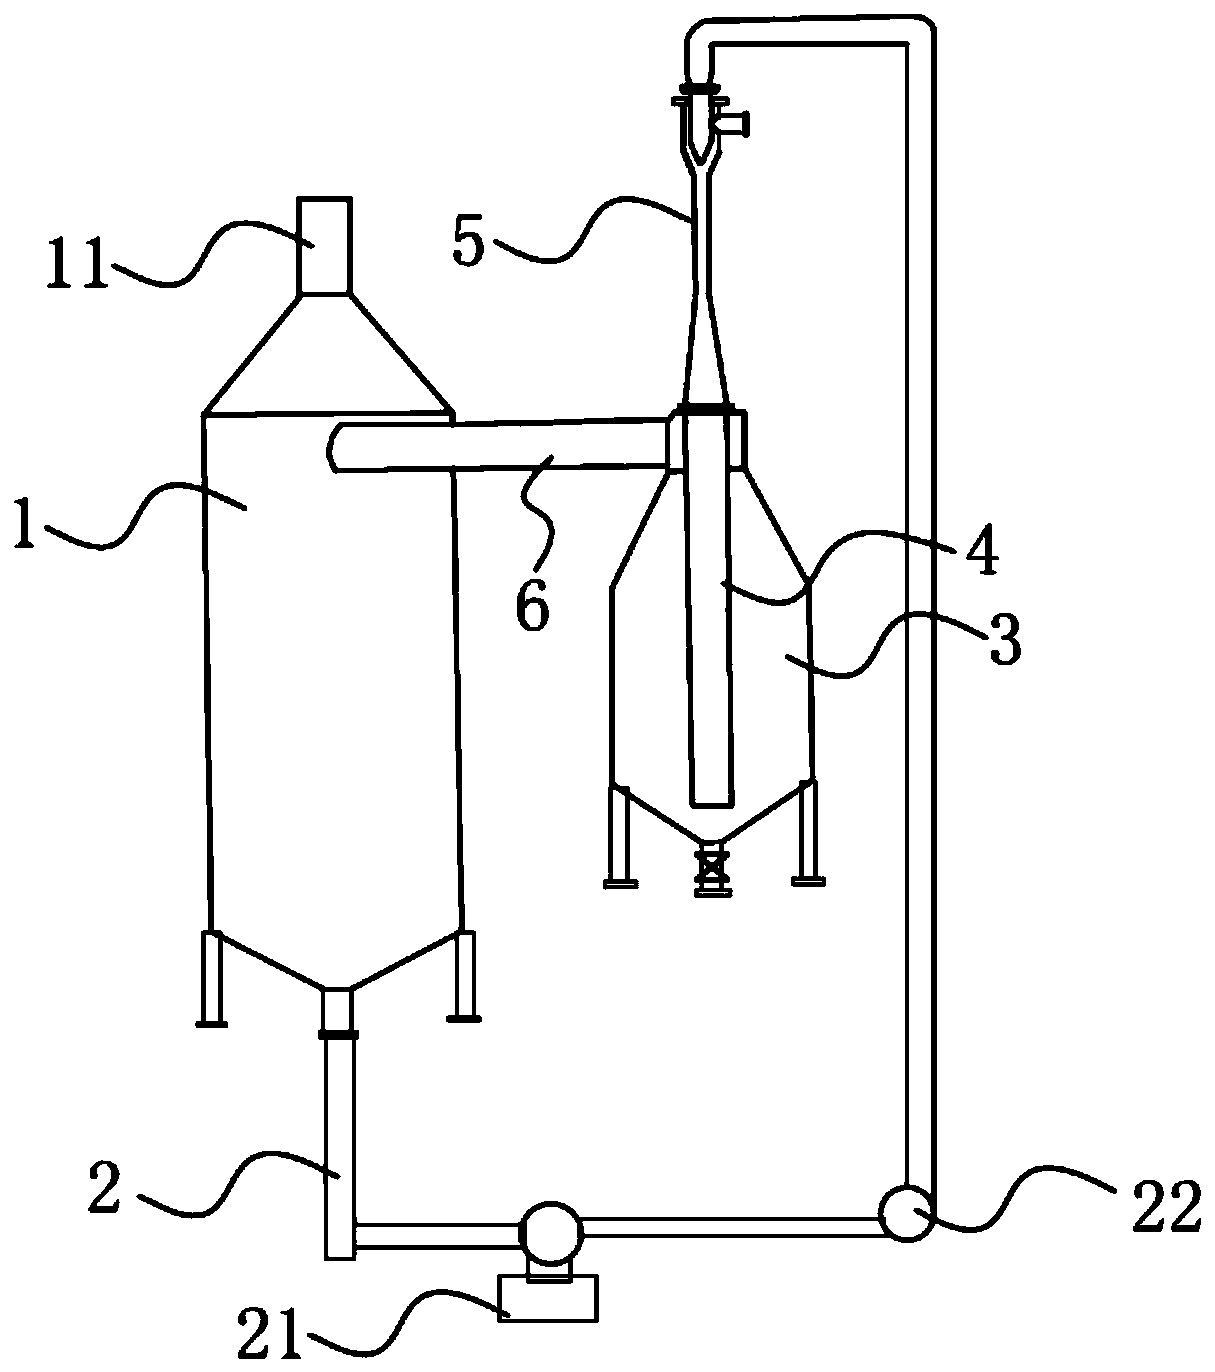 Method and system for spray carbonation of nanometer calcium carbonate